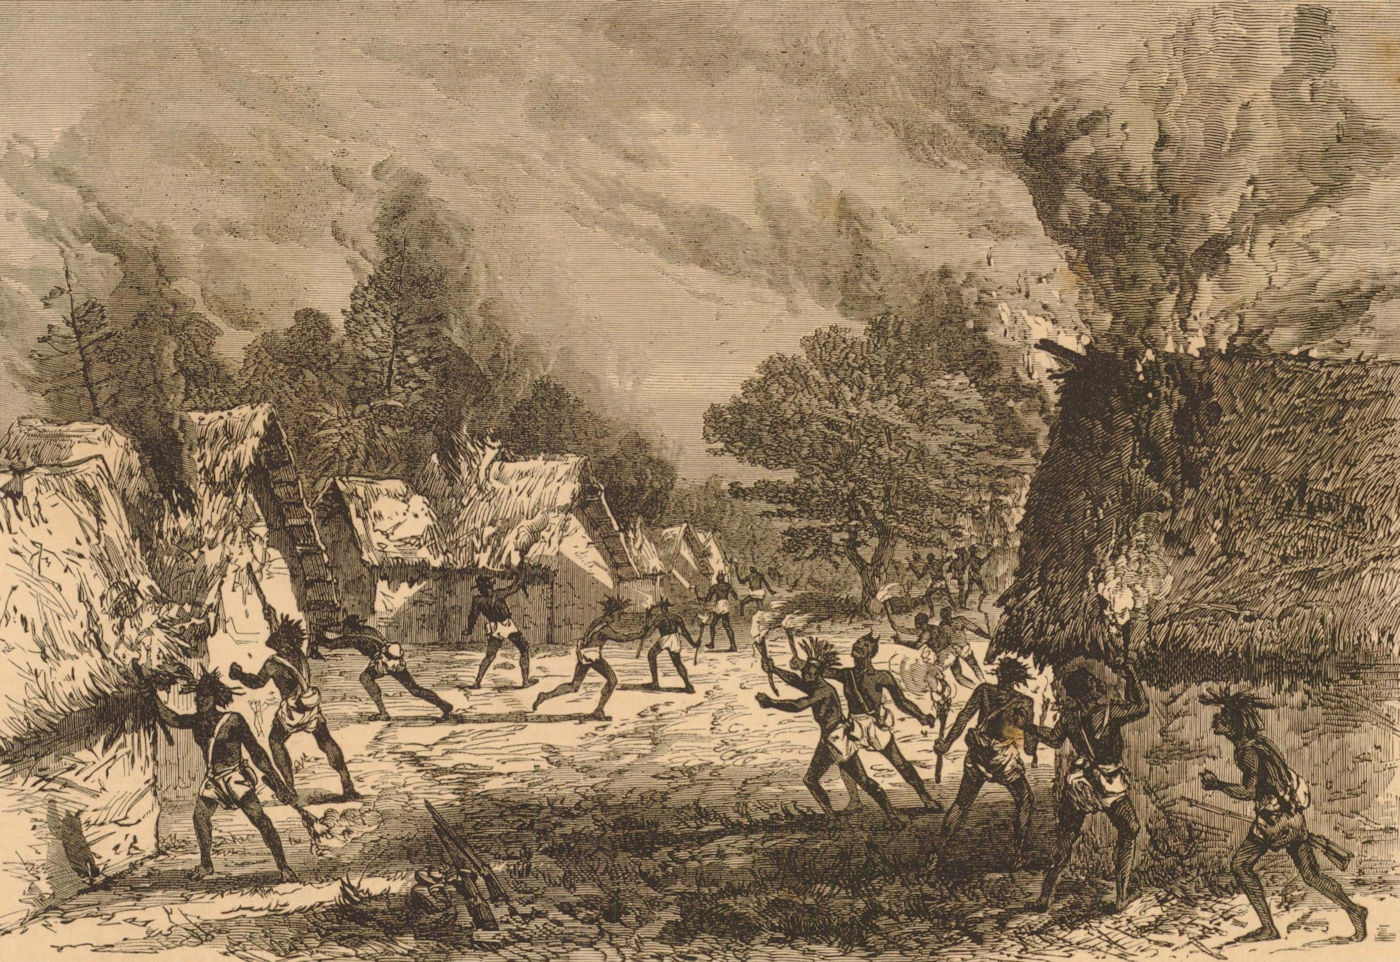 Associate Product 3rd Ashanti War. Lord Gifford's scouts burn village. Natives Warry. Ghana 1874